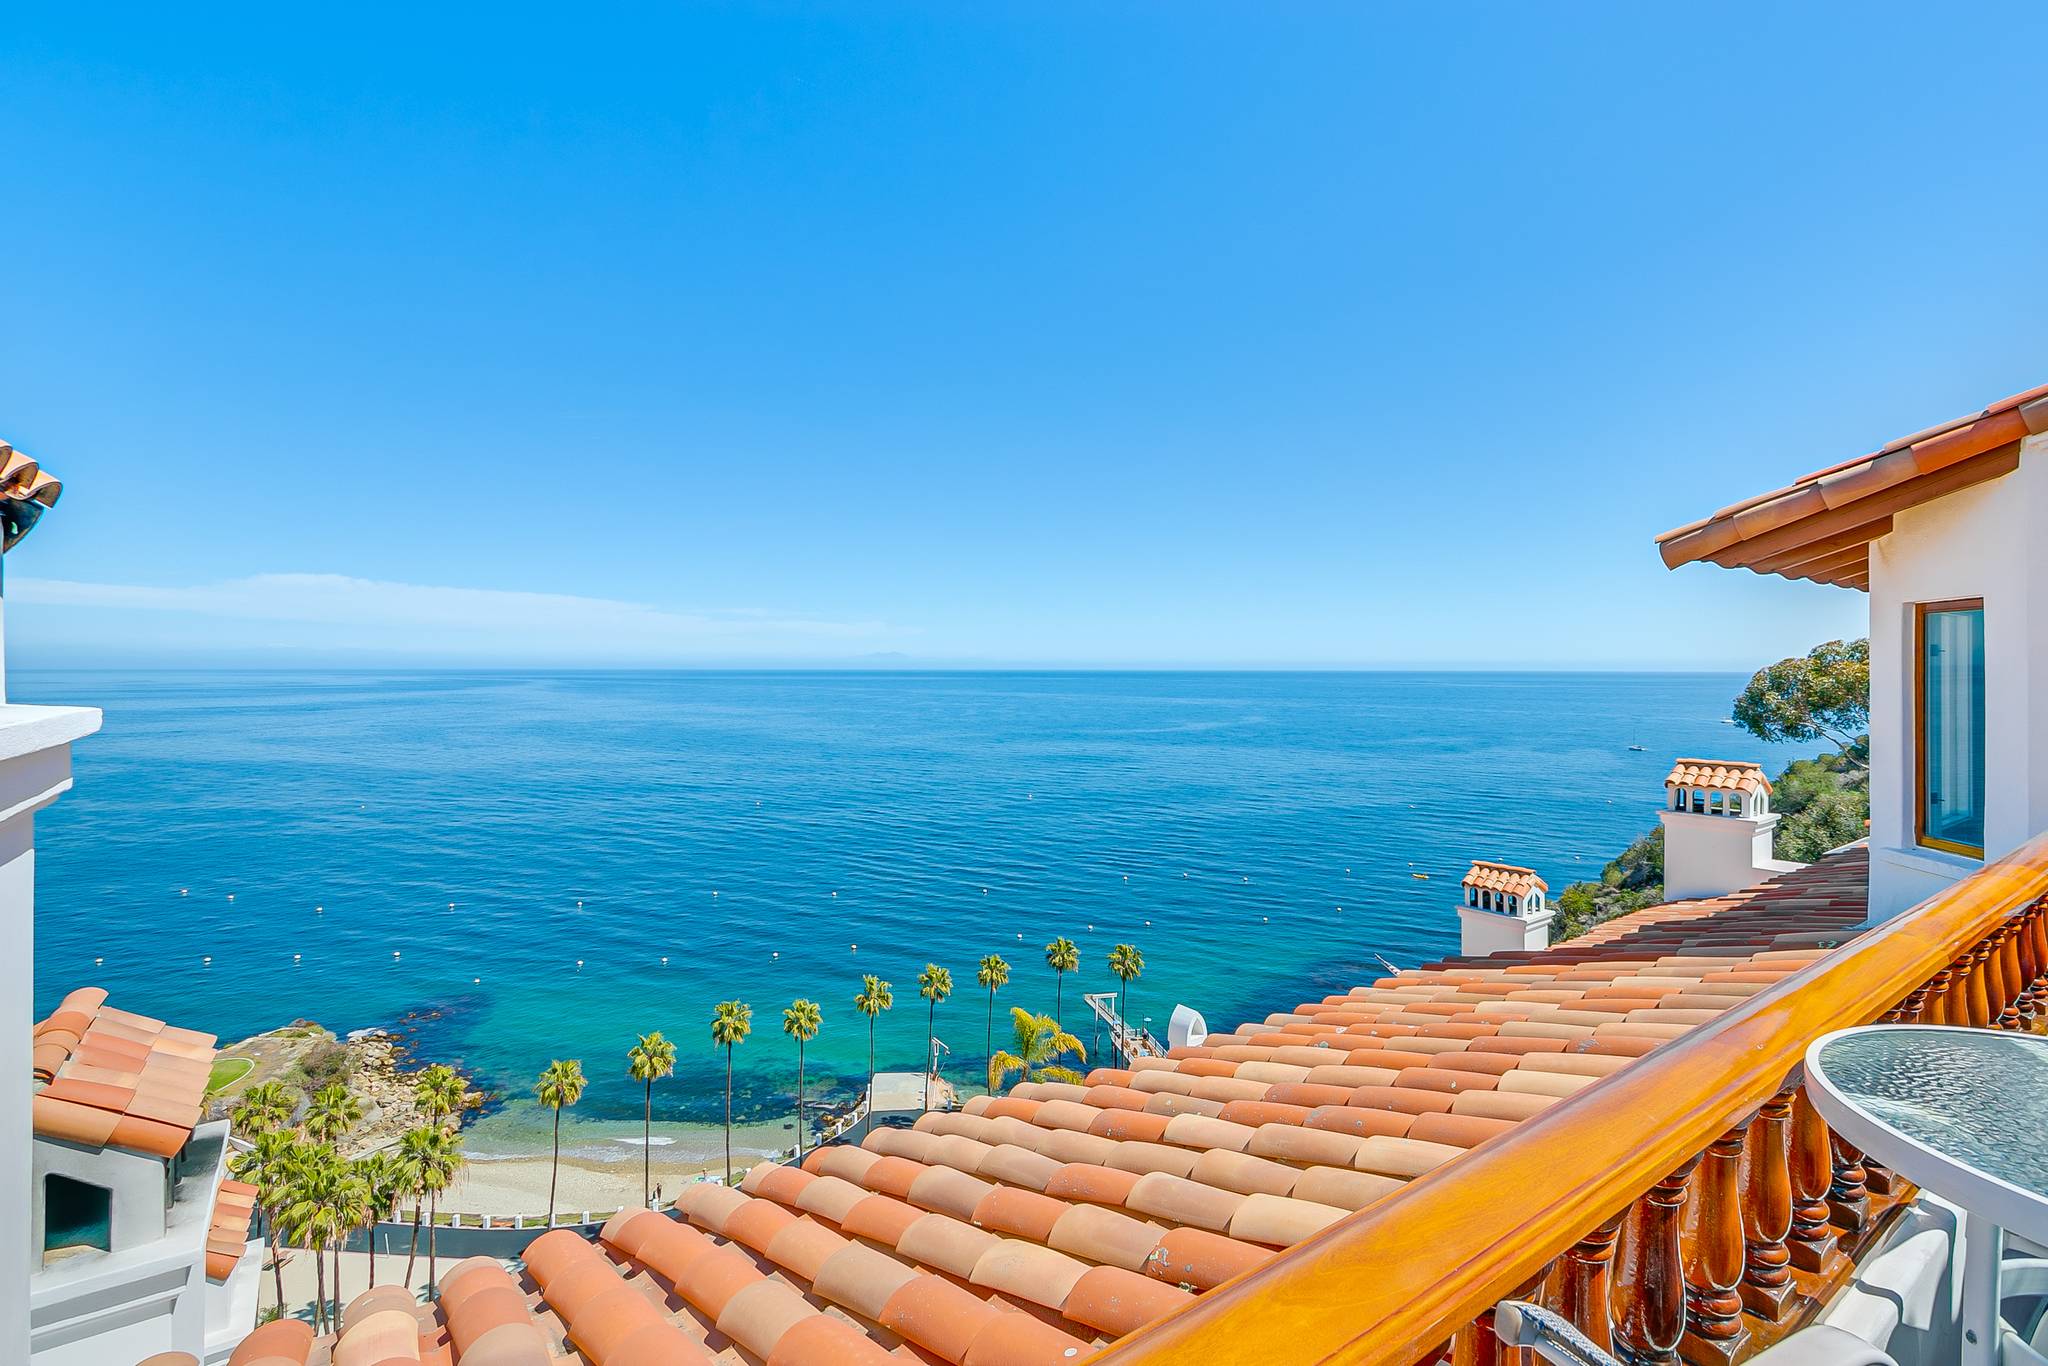 H180 - Hamilton Cove Villa 1-80 | Catalina Island Vacation Rentals